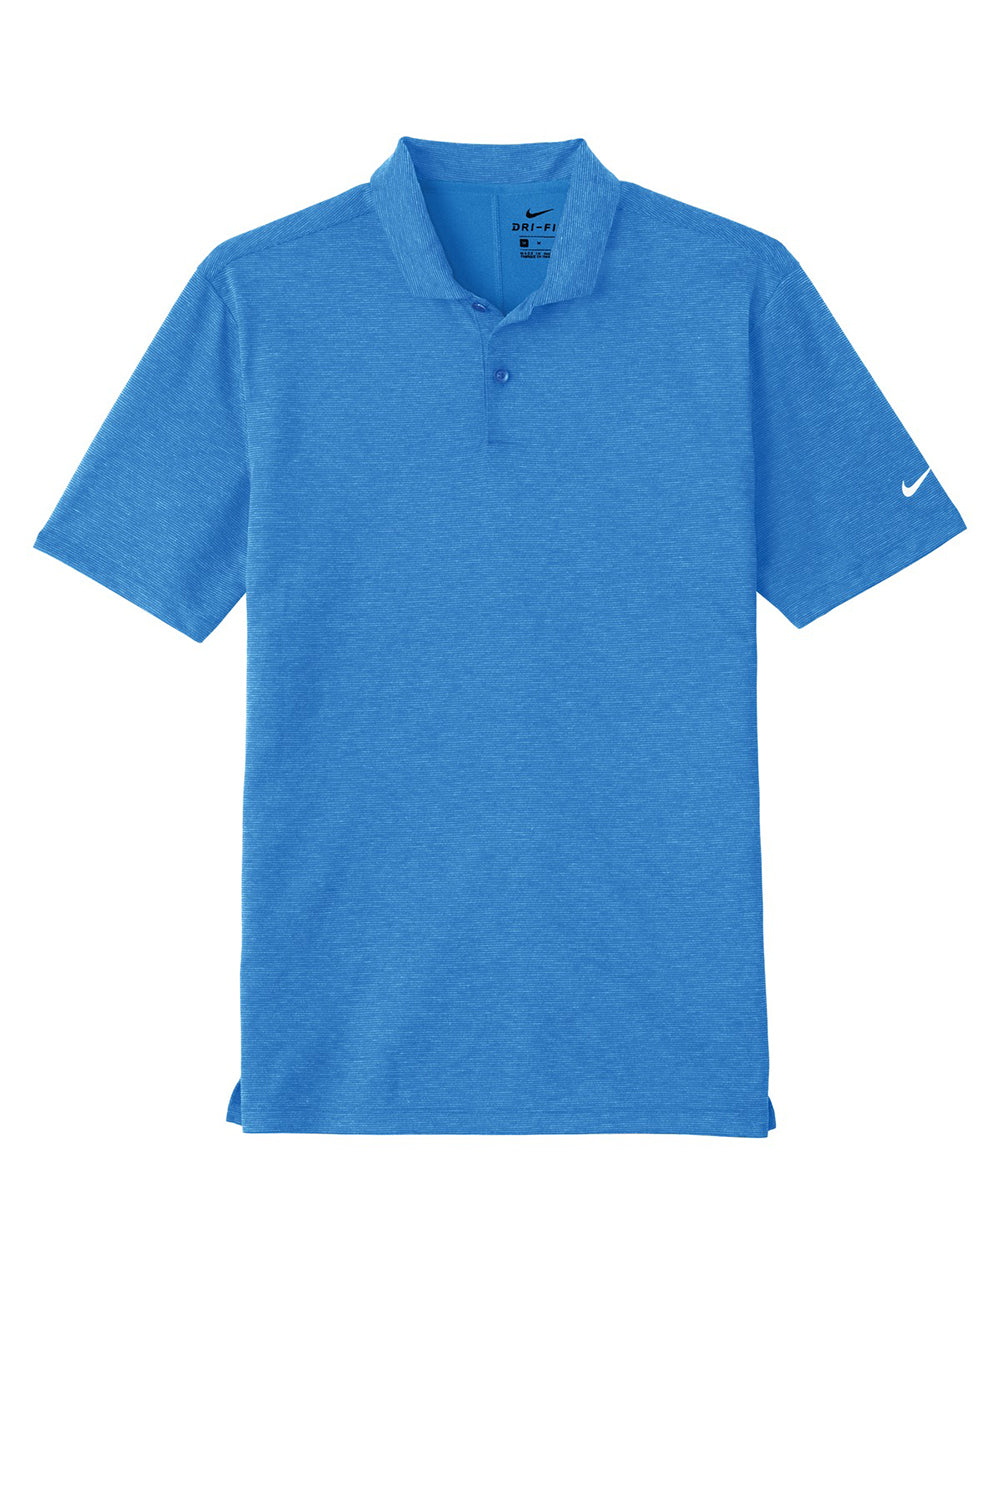 Nike NKAA1854 Mens Prime Dri-Fit Moisture Wicking Short Sleeve Polo Shirt Photo Blue Flat Front